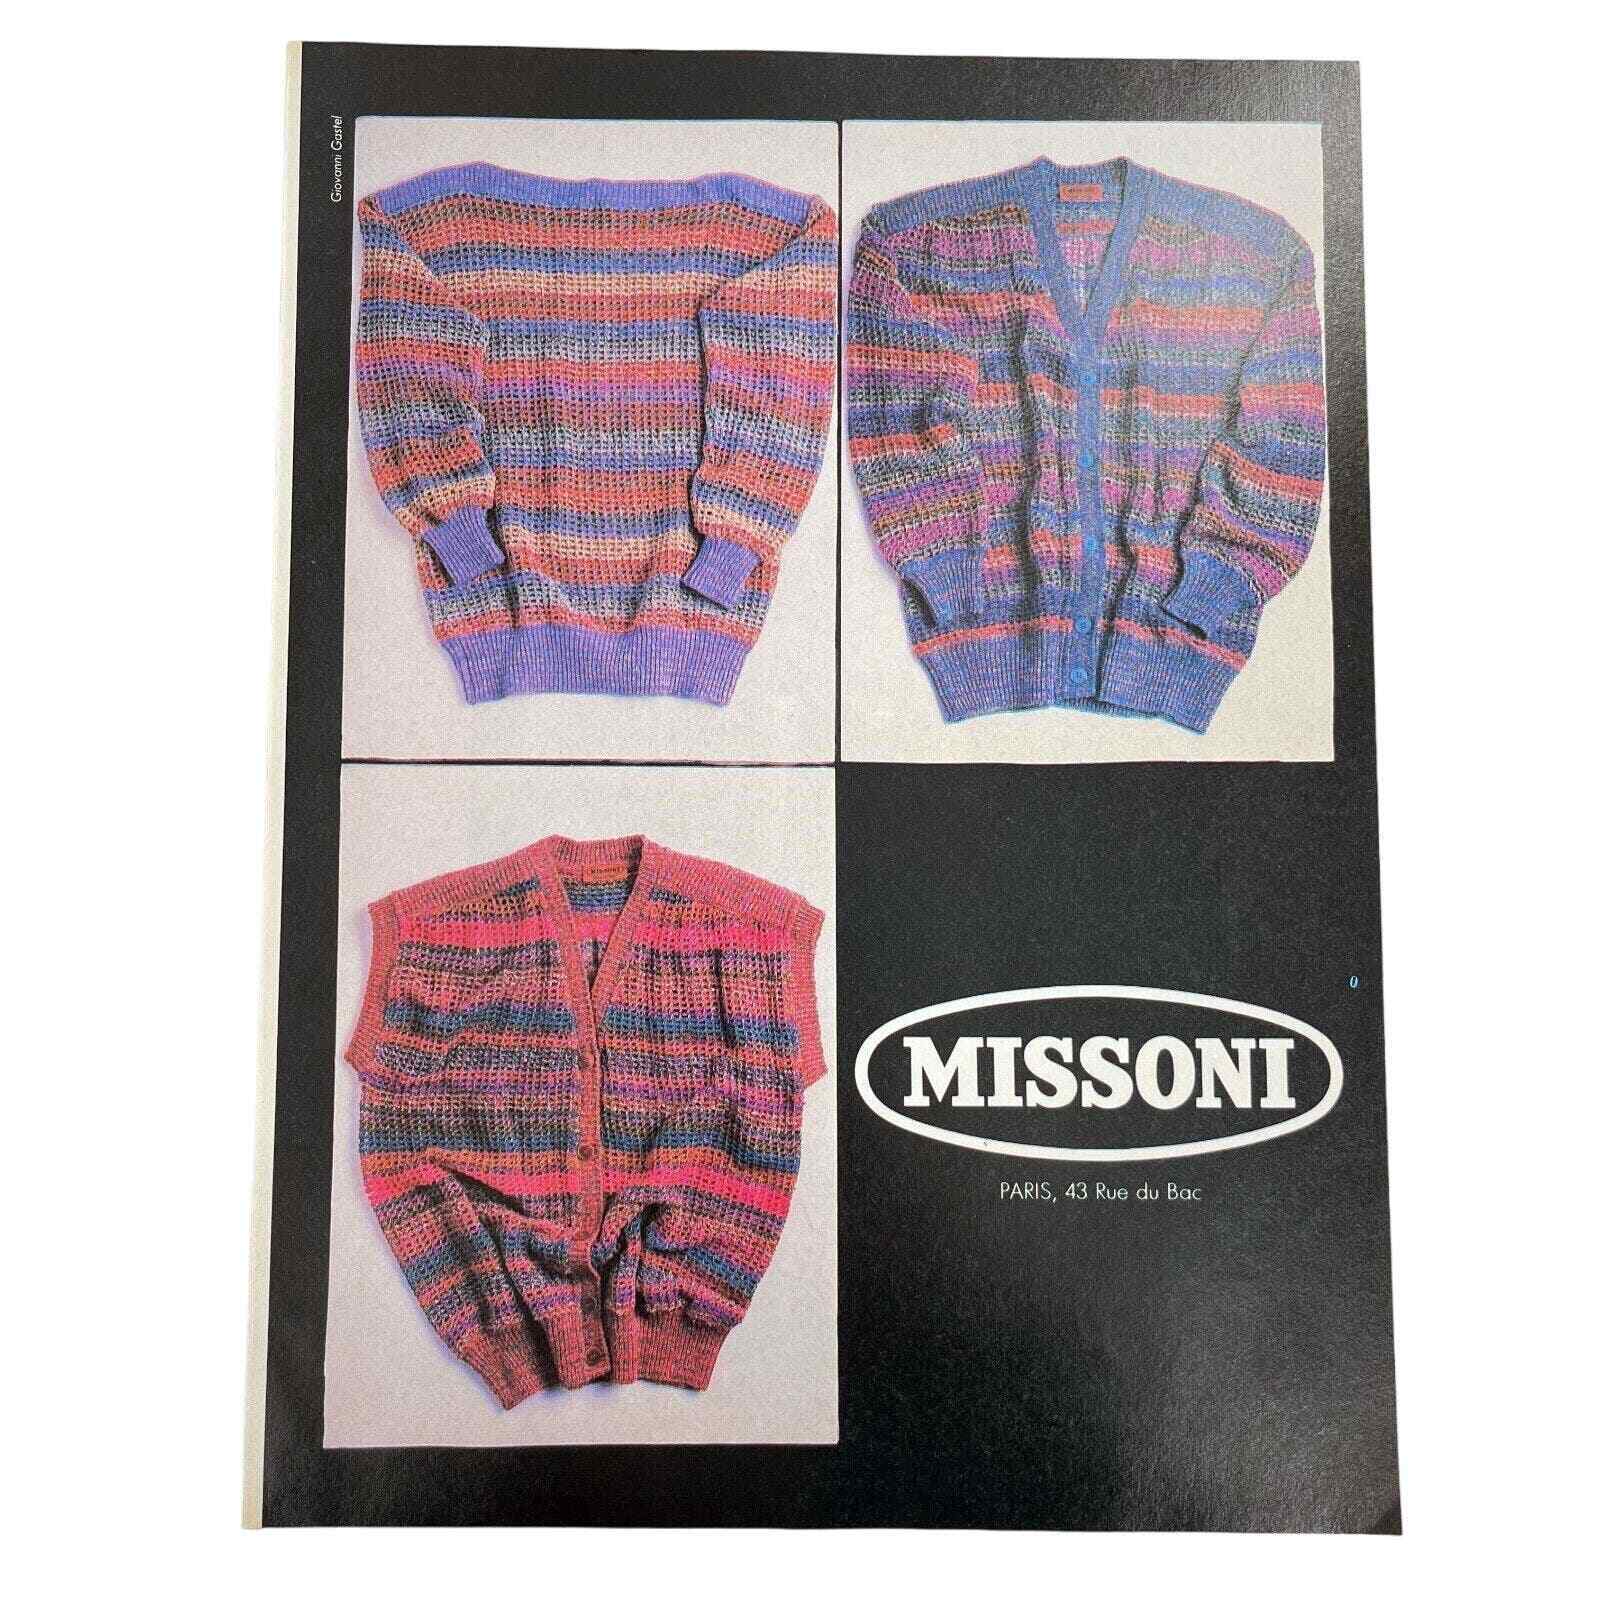 Missoni Sweater Vintage Magazine Print Ad 80s Fashion Belle France Dress 1983